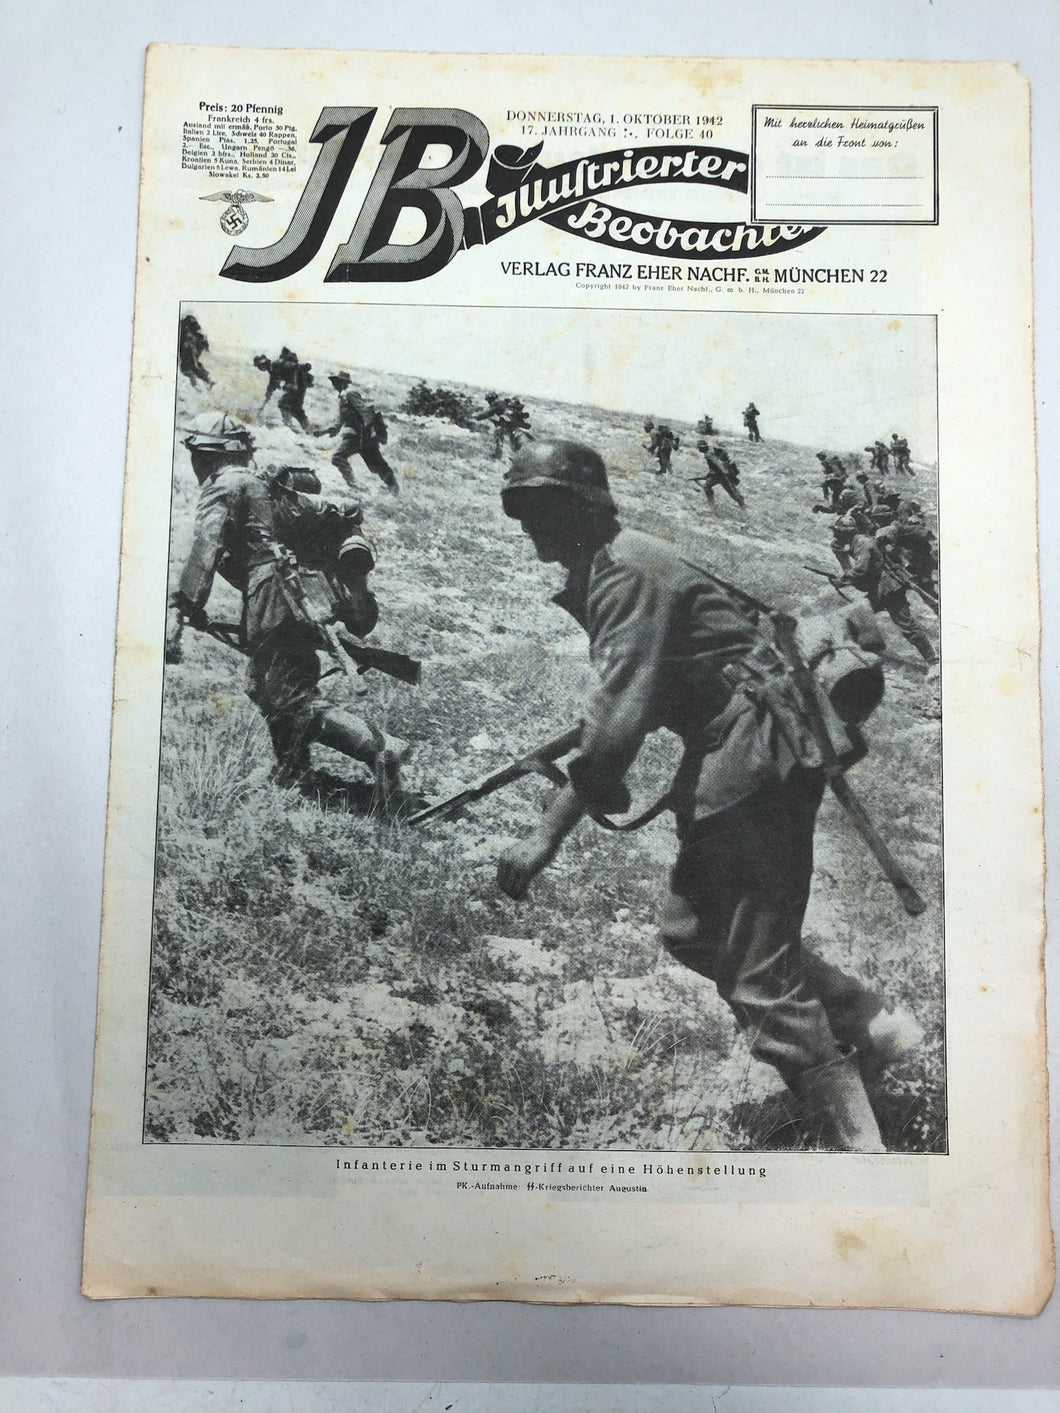 JB Juustrierter Beobachter NSDAP Magazine Original WW2 German - 1 October 1942